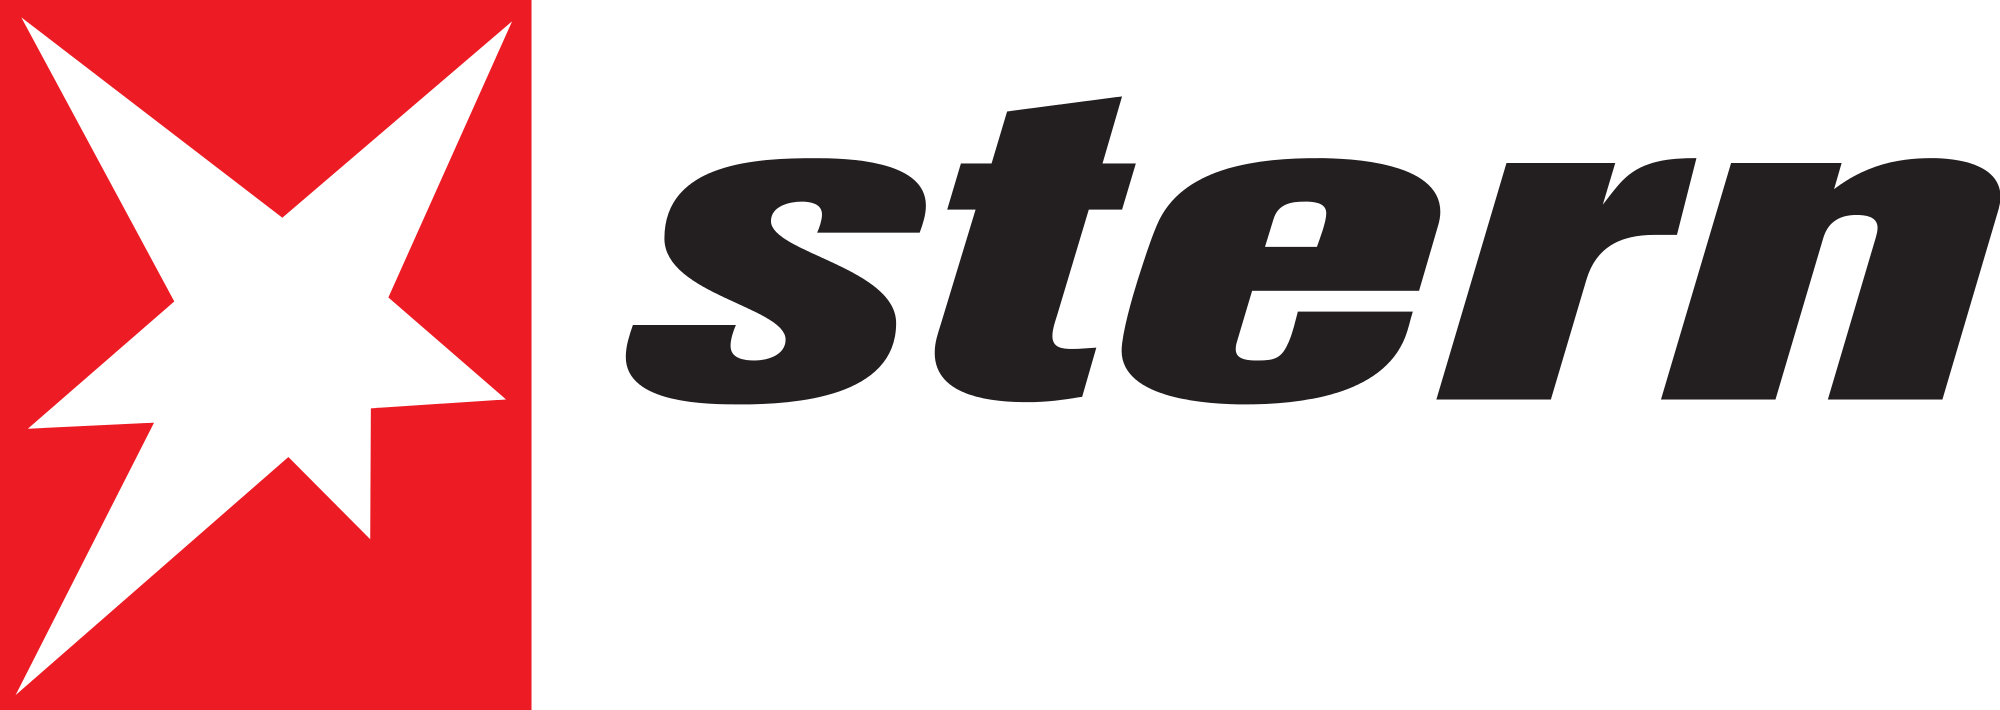 Stern Magazin logo